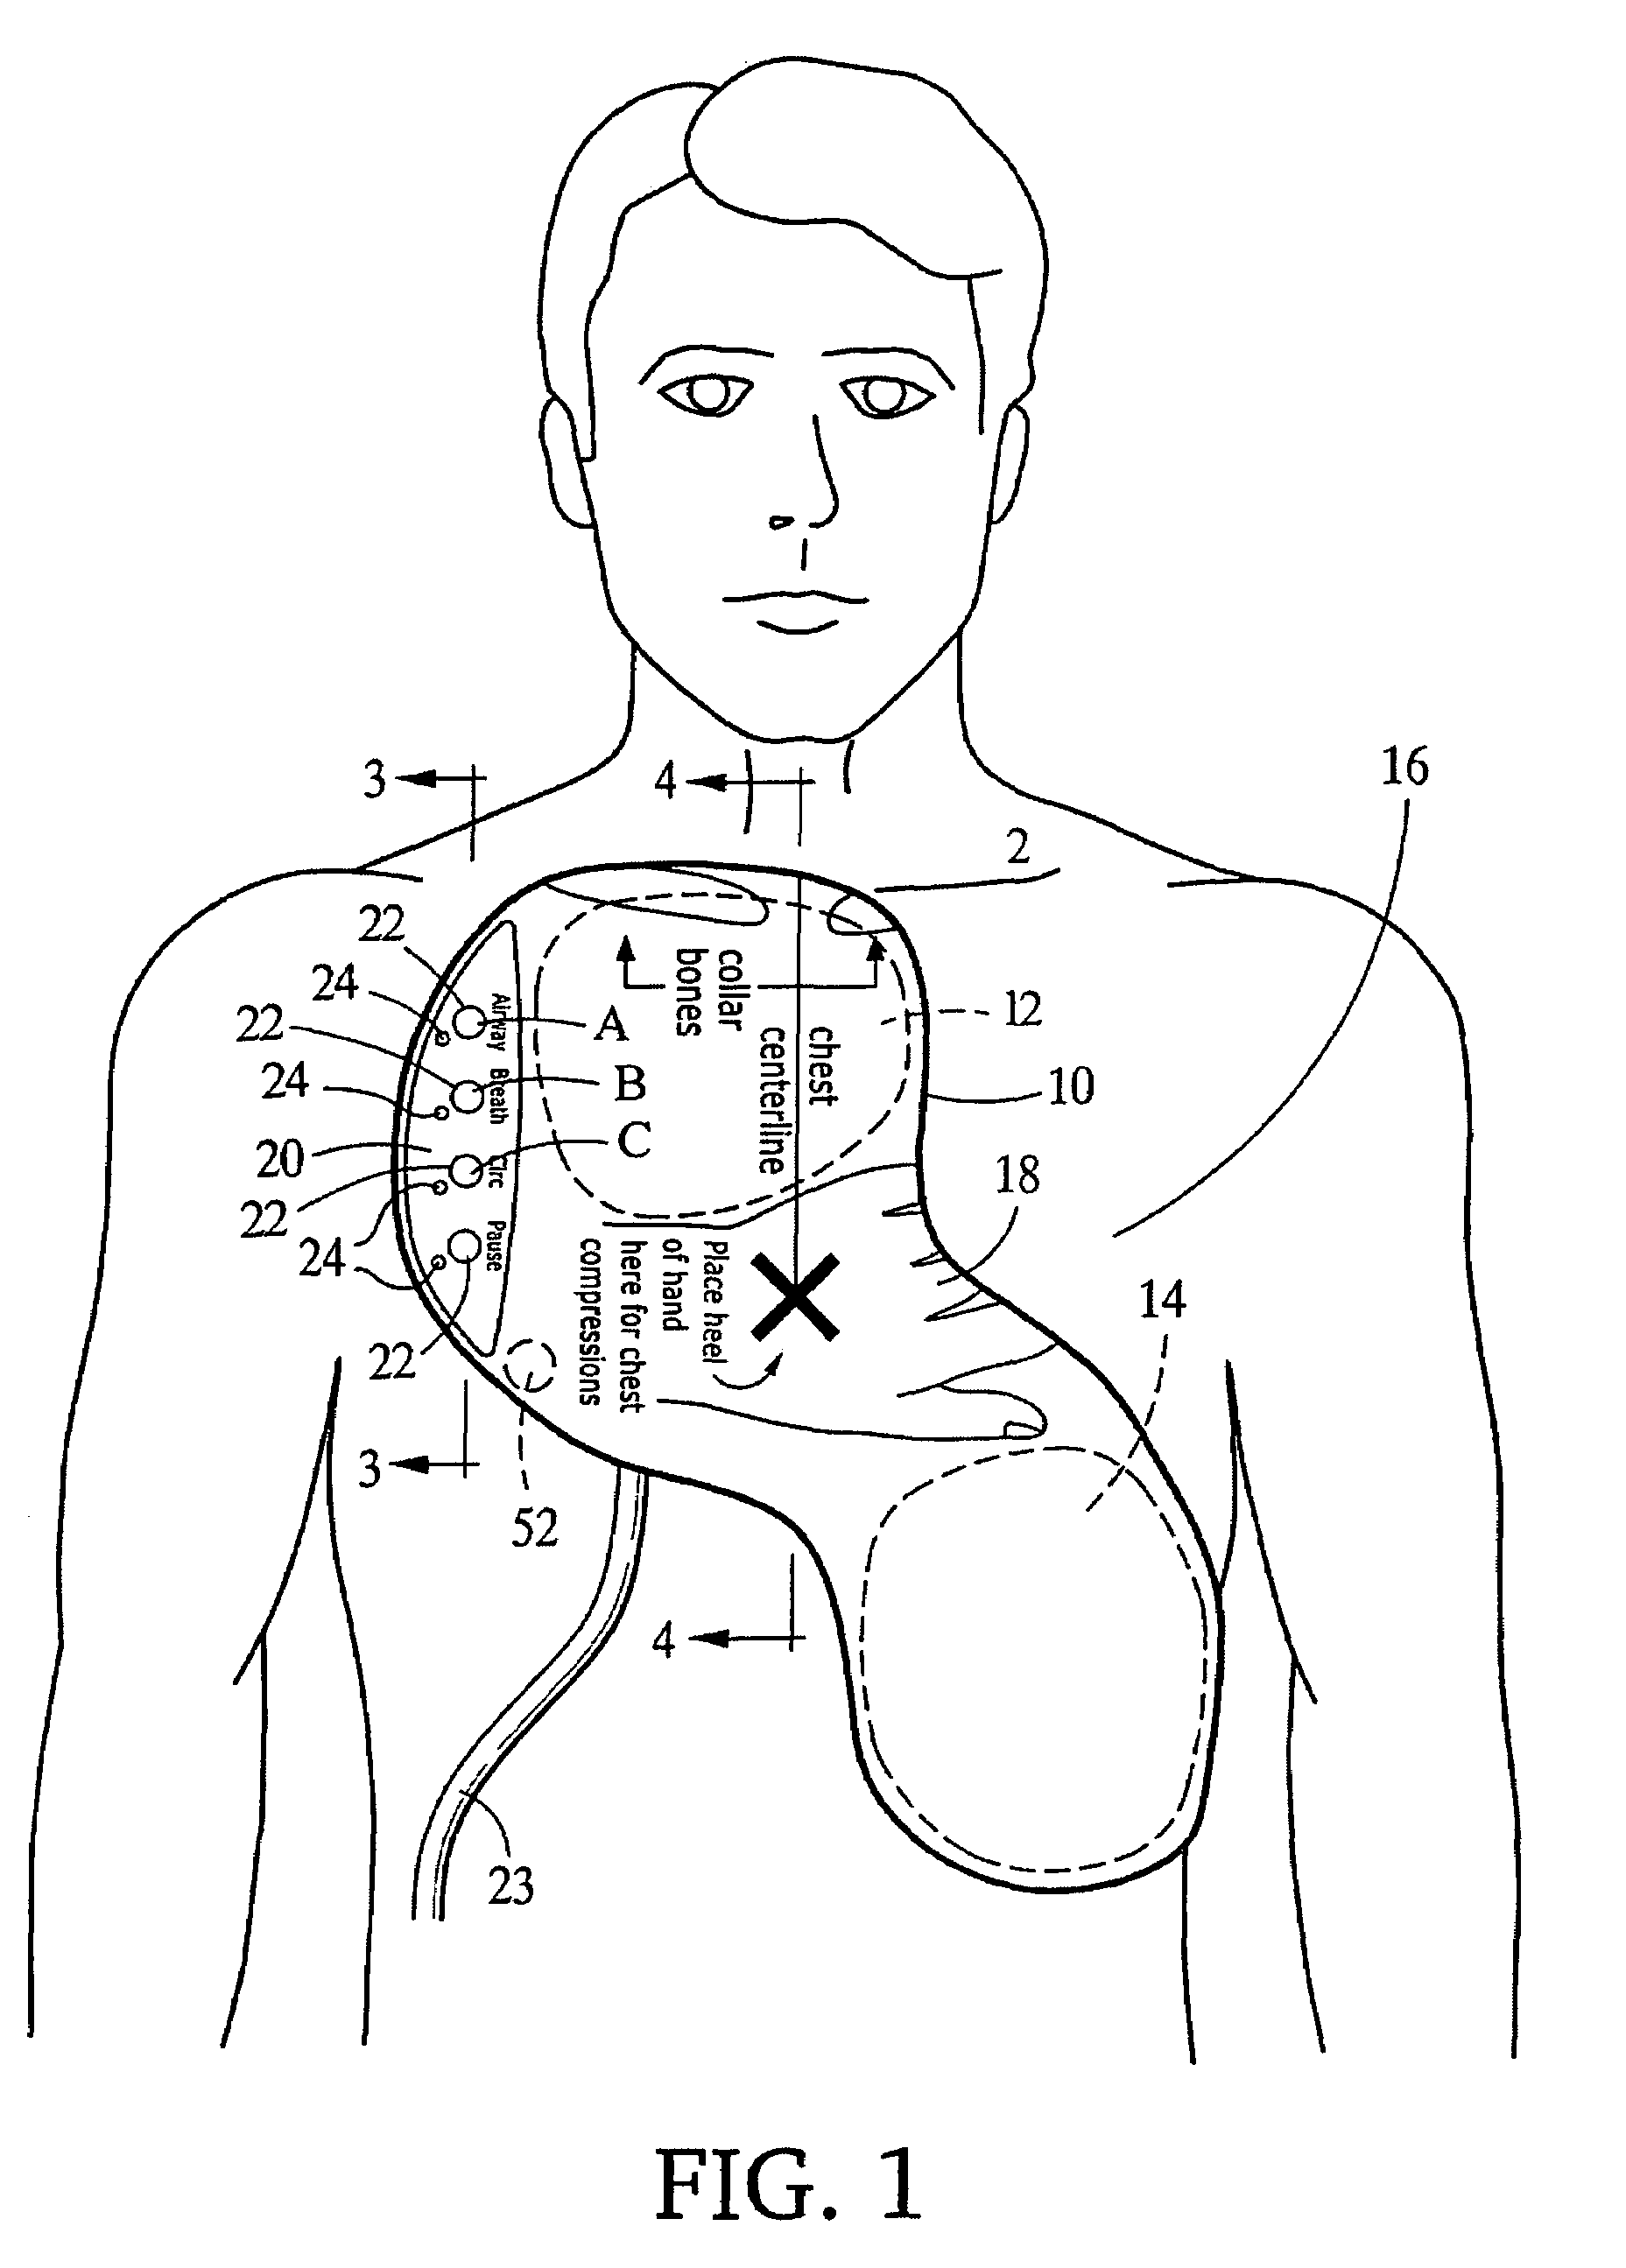 Integrated resuscitation